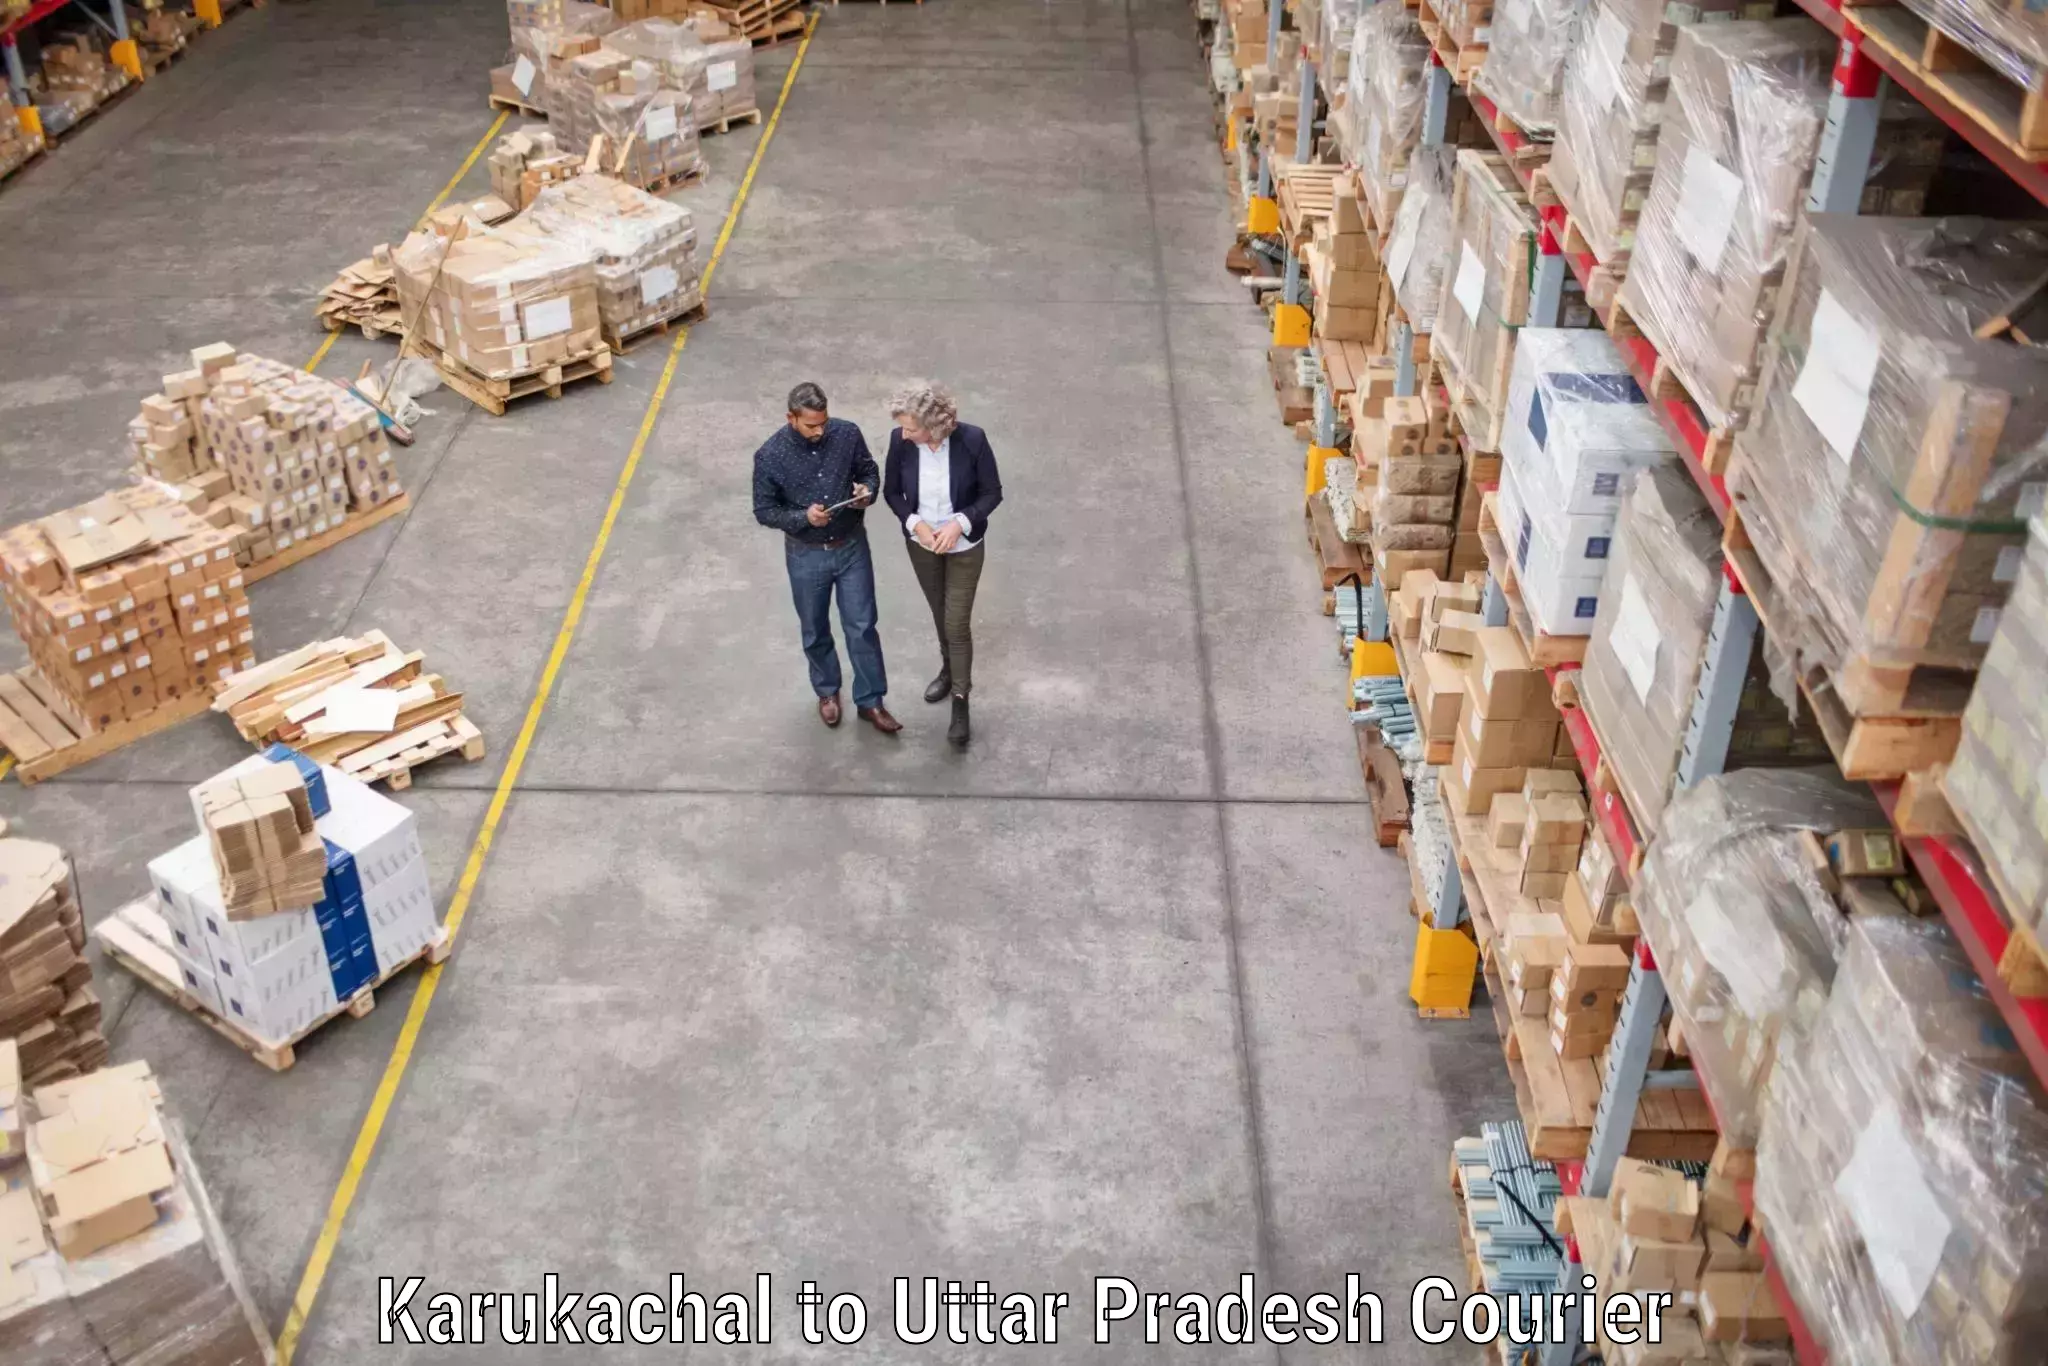 Quality moving company Karukachal to Hathras